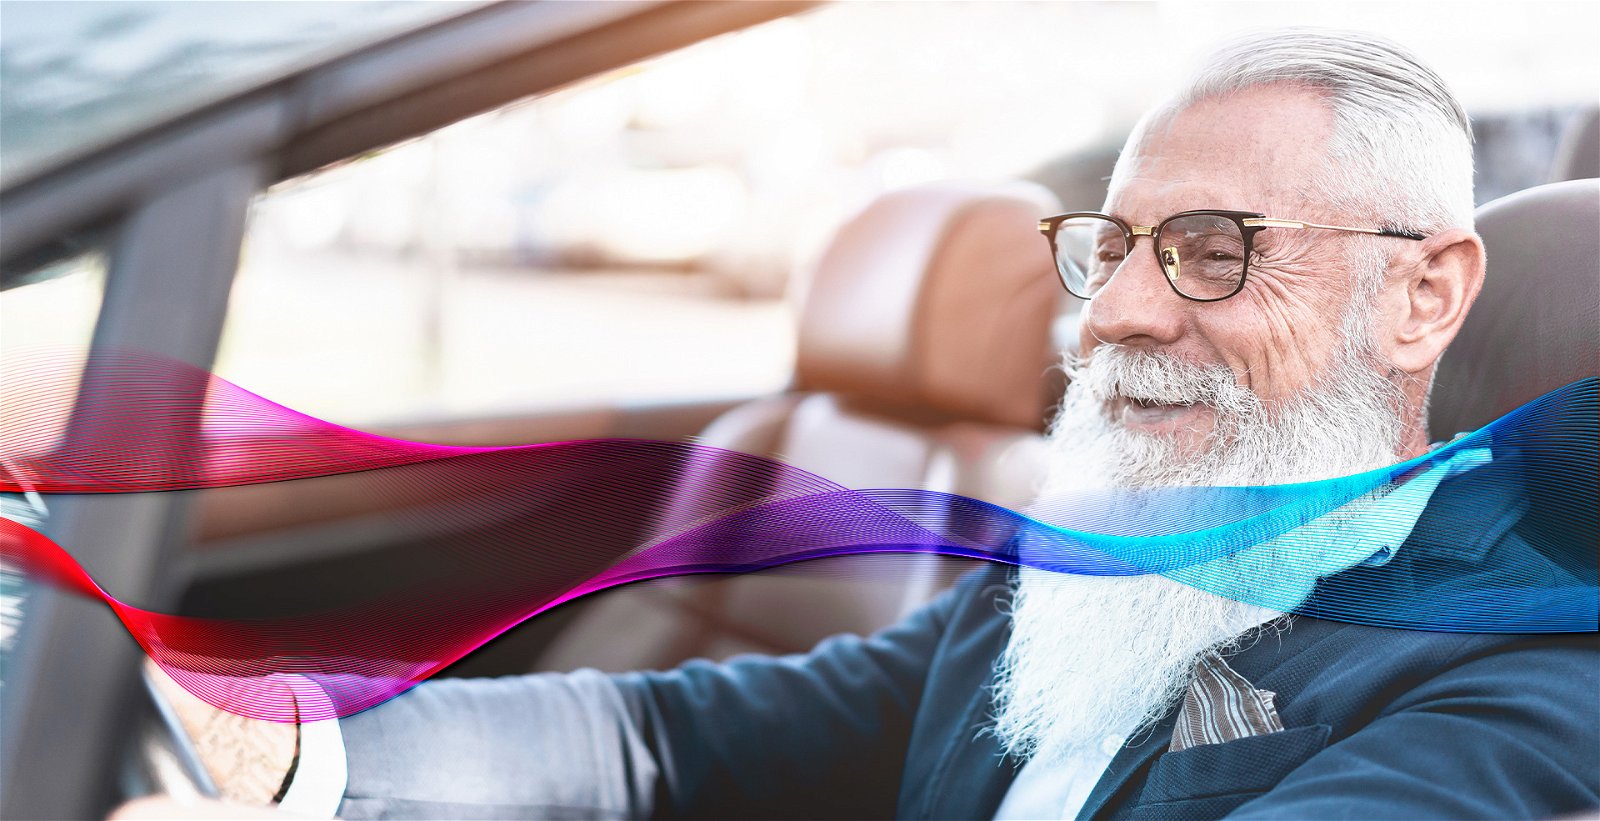 An old man drives a car